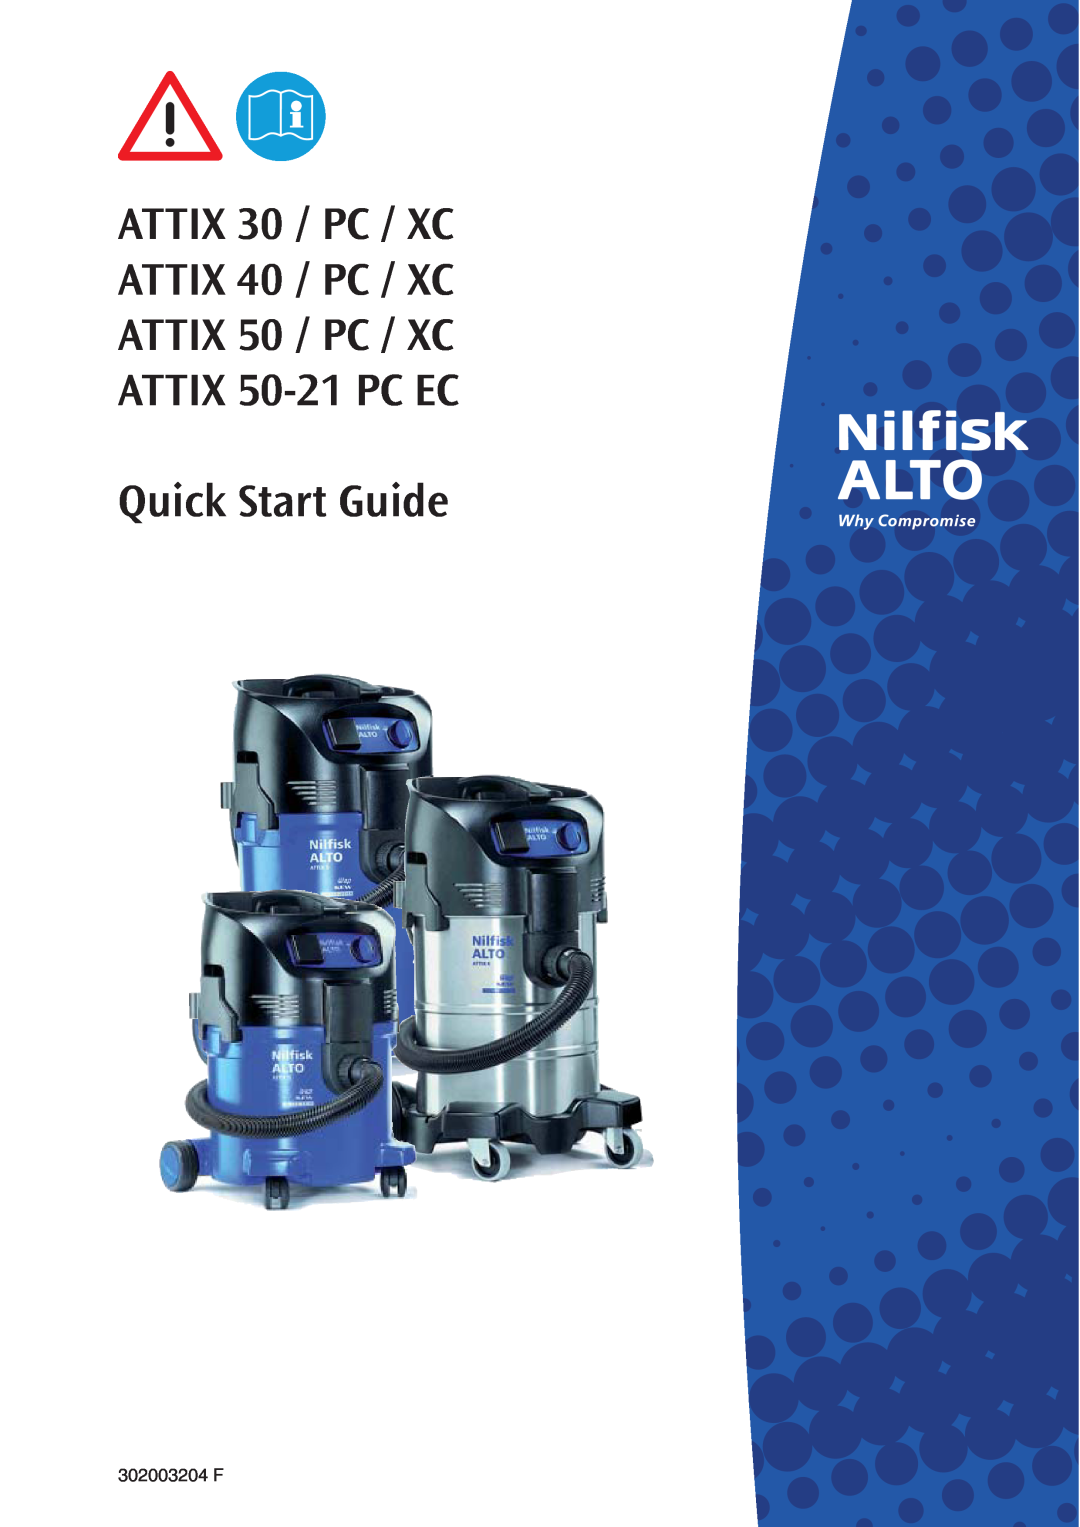 Nilfisk-ALTO ATTIX 30 / PC / XC, ATTIX 50-21 PC EC quick start Quick Start Guide, 302003204 F 